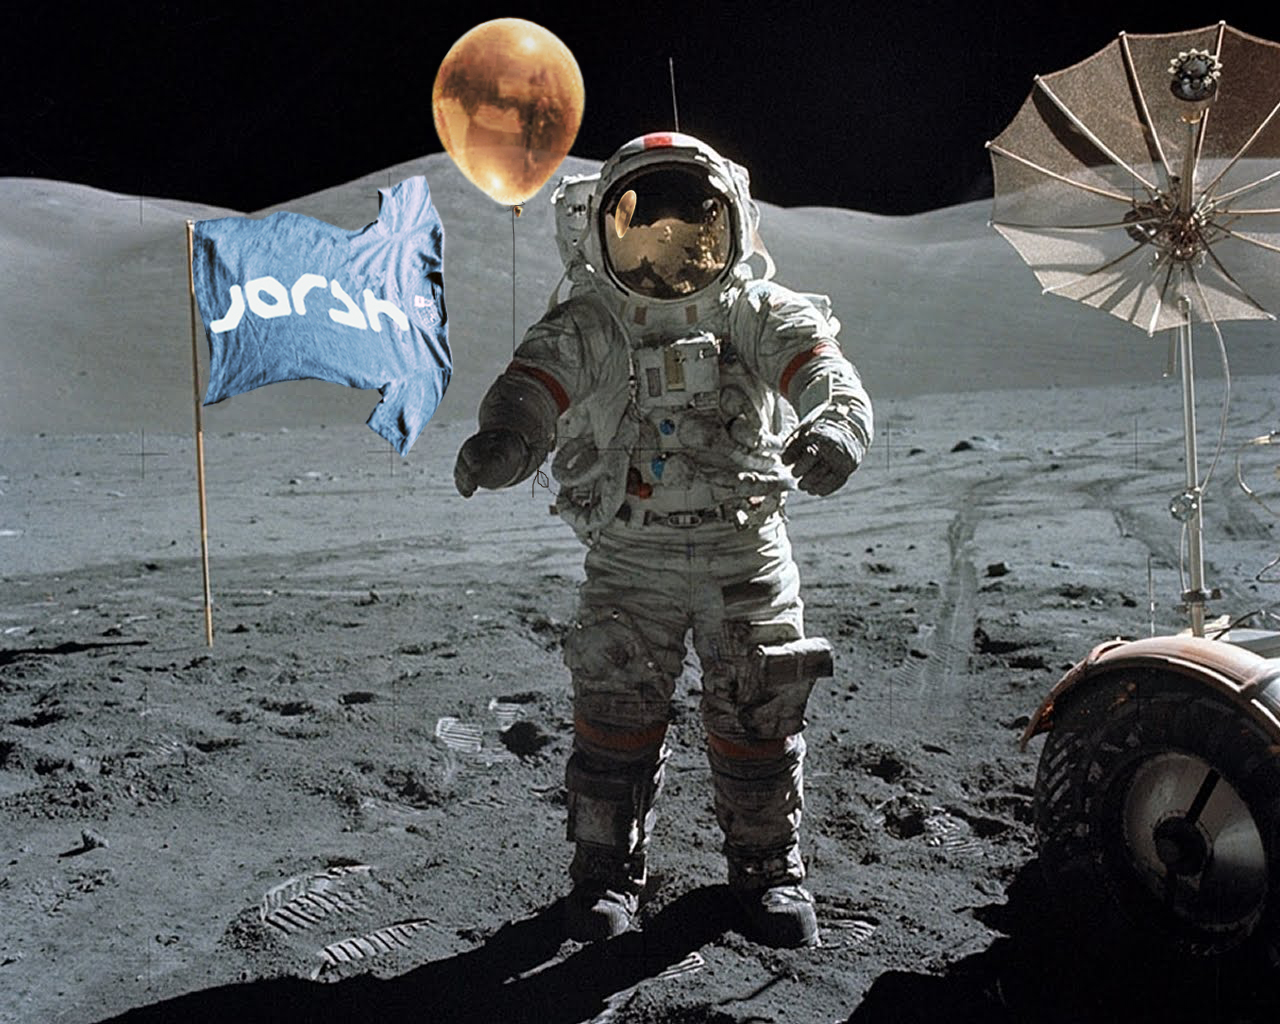 astronaut on the moon with t-shirt flying on flagpole displaying jorsh logo